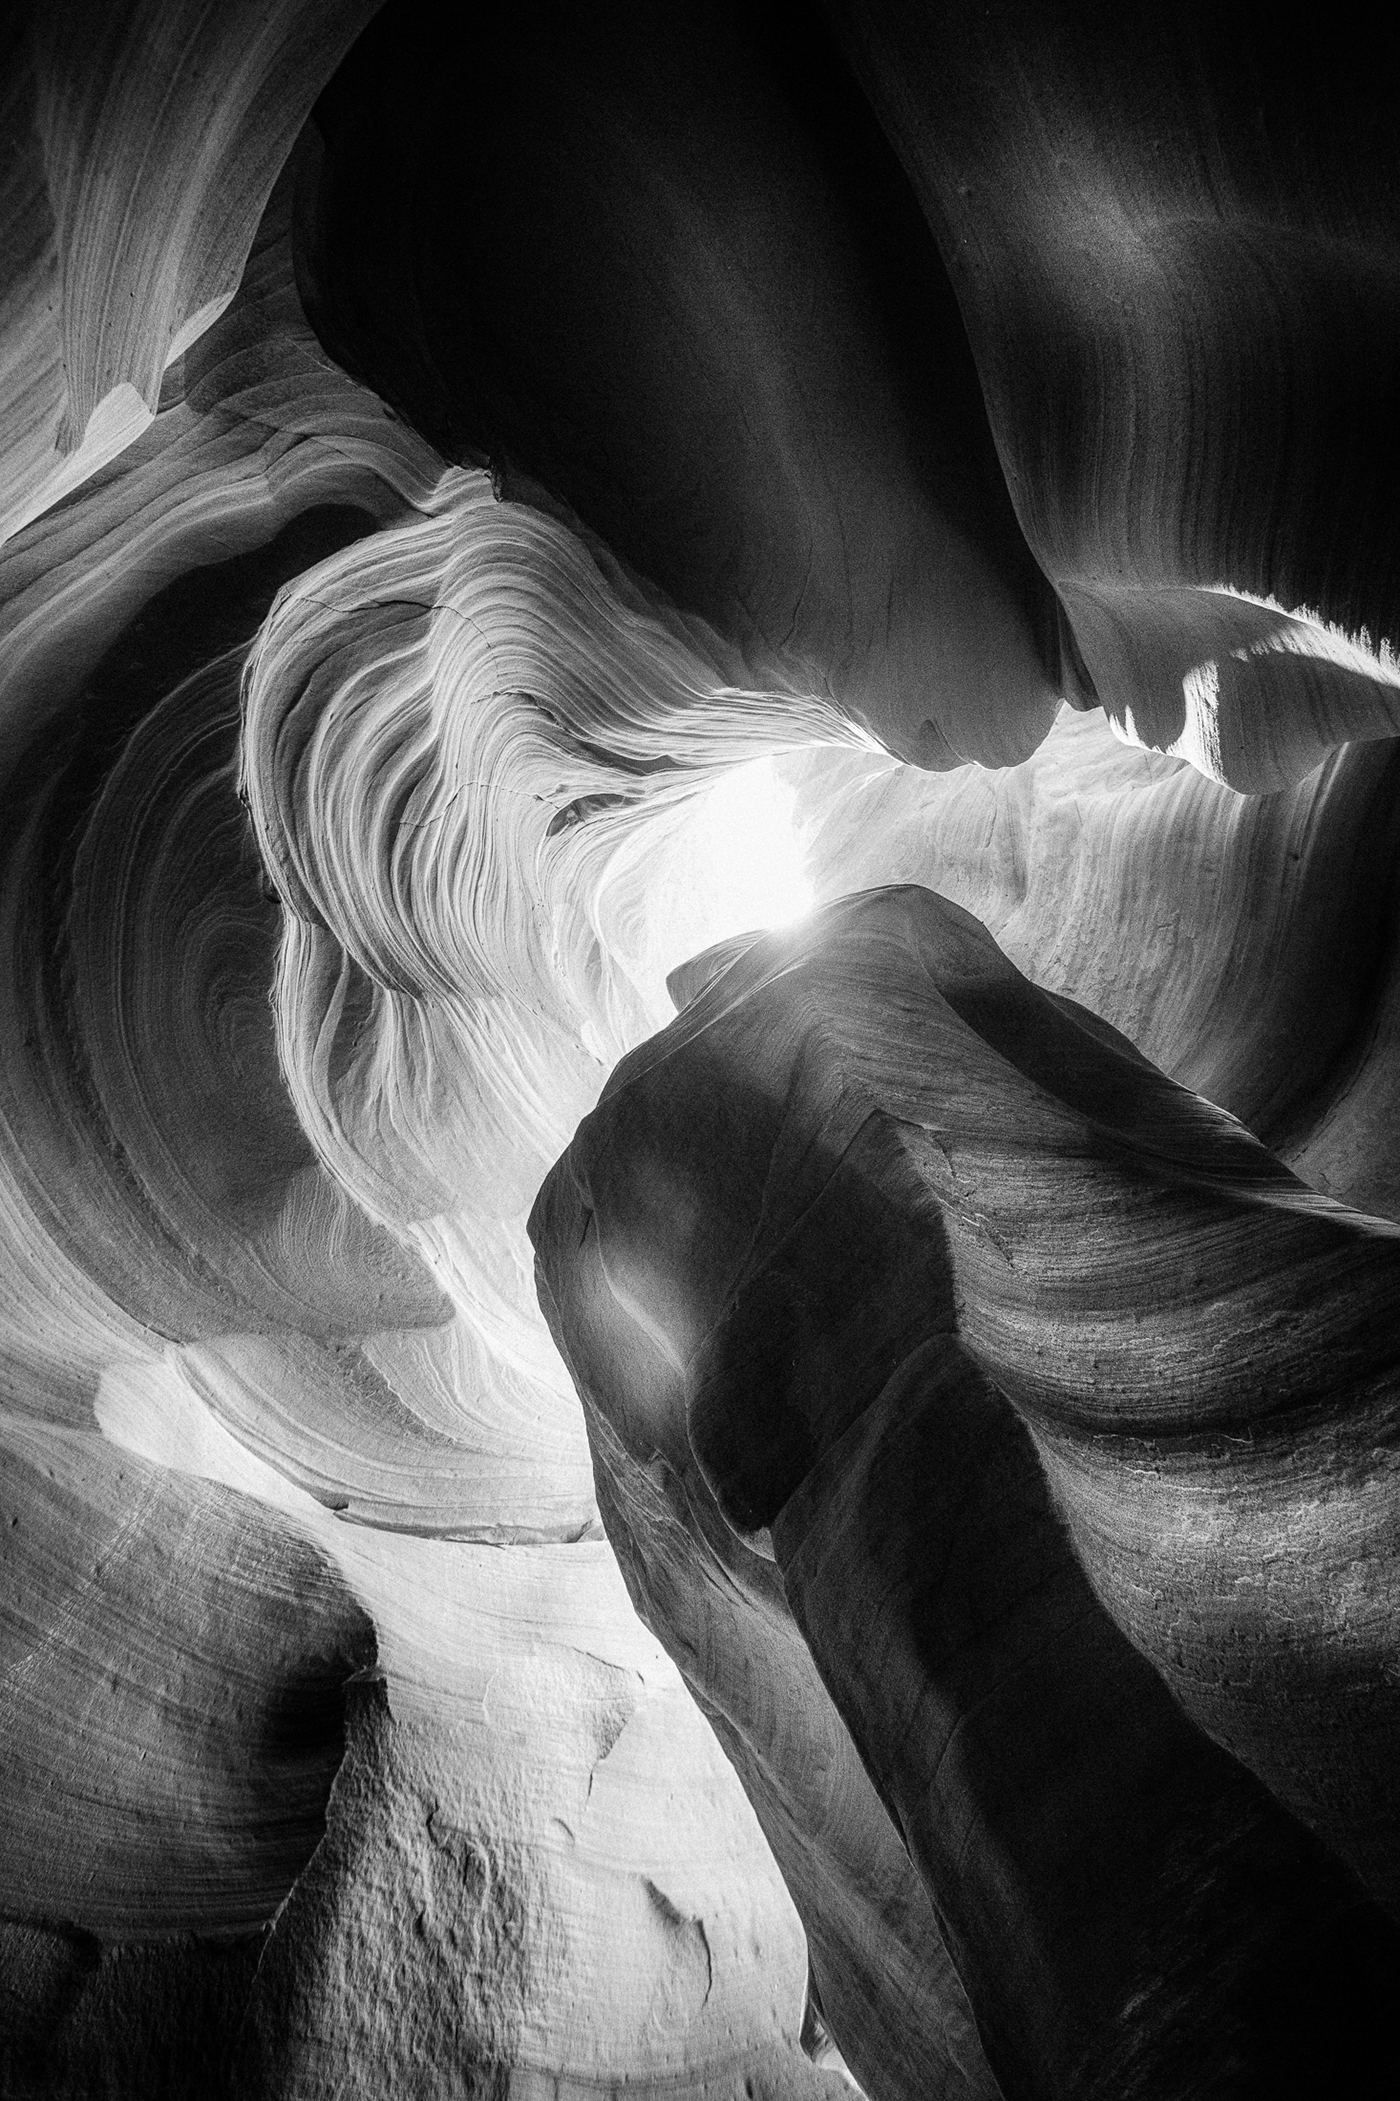 utah arizona Landscape nature photography black and white calm photos jim crotty zion national park antelope canyon Yant Flats